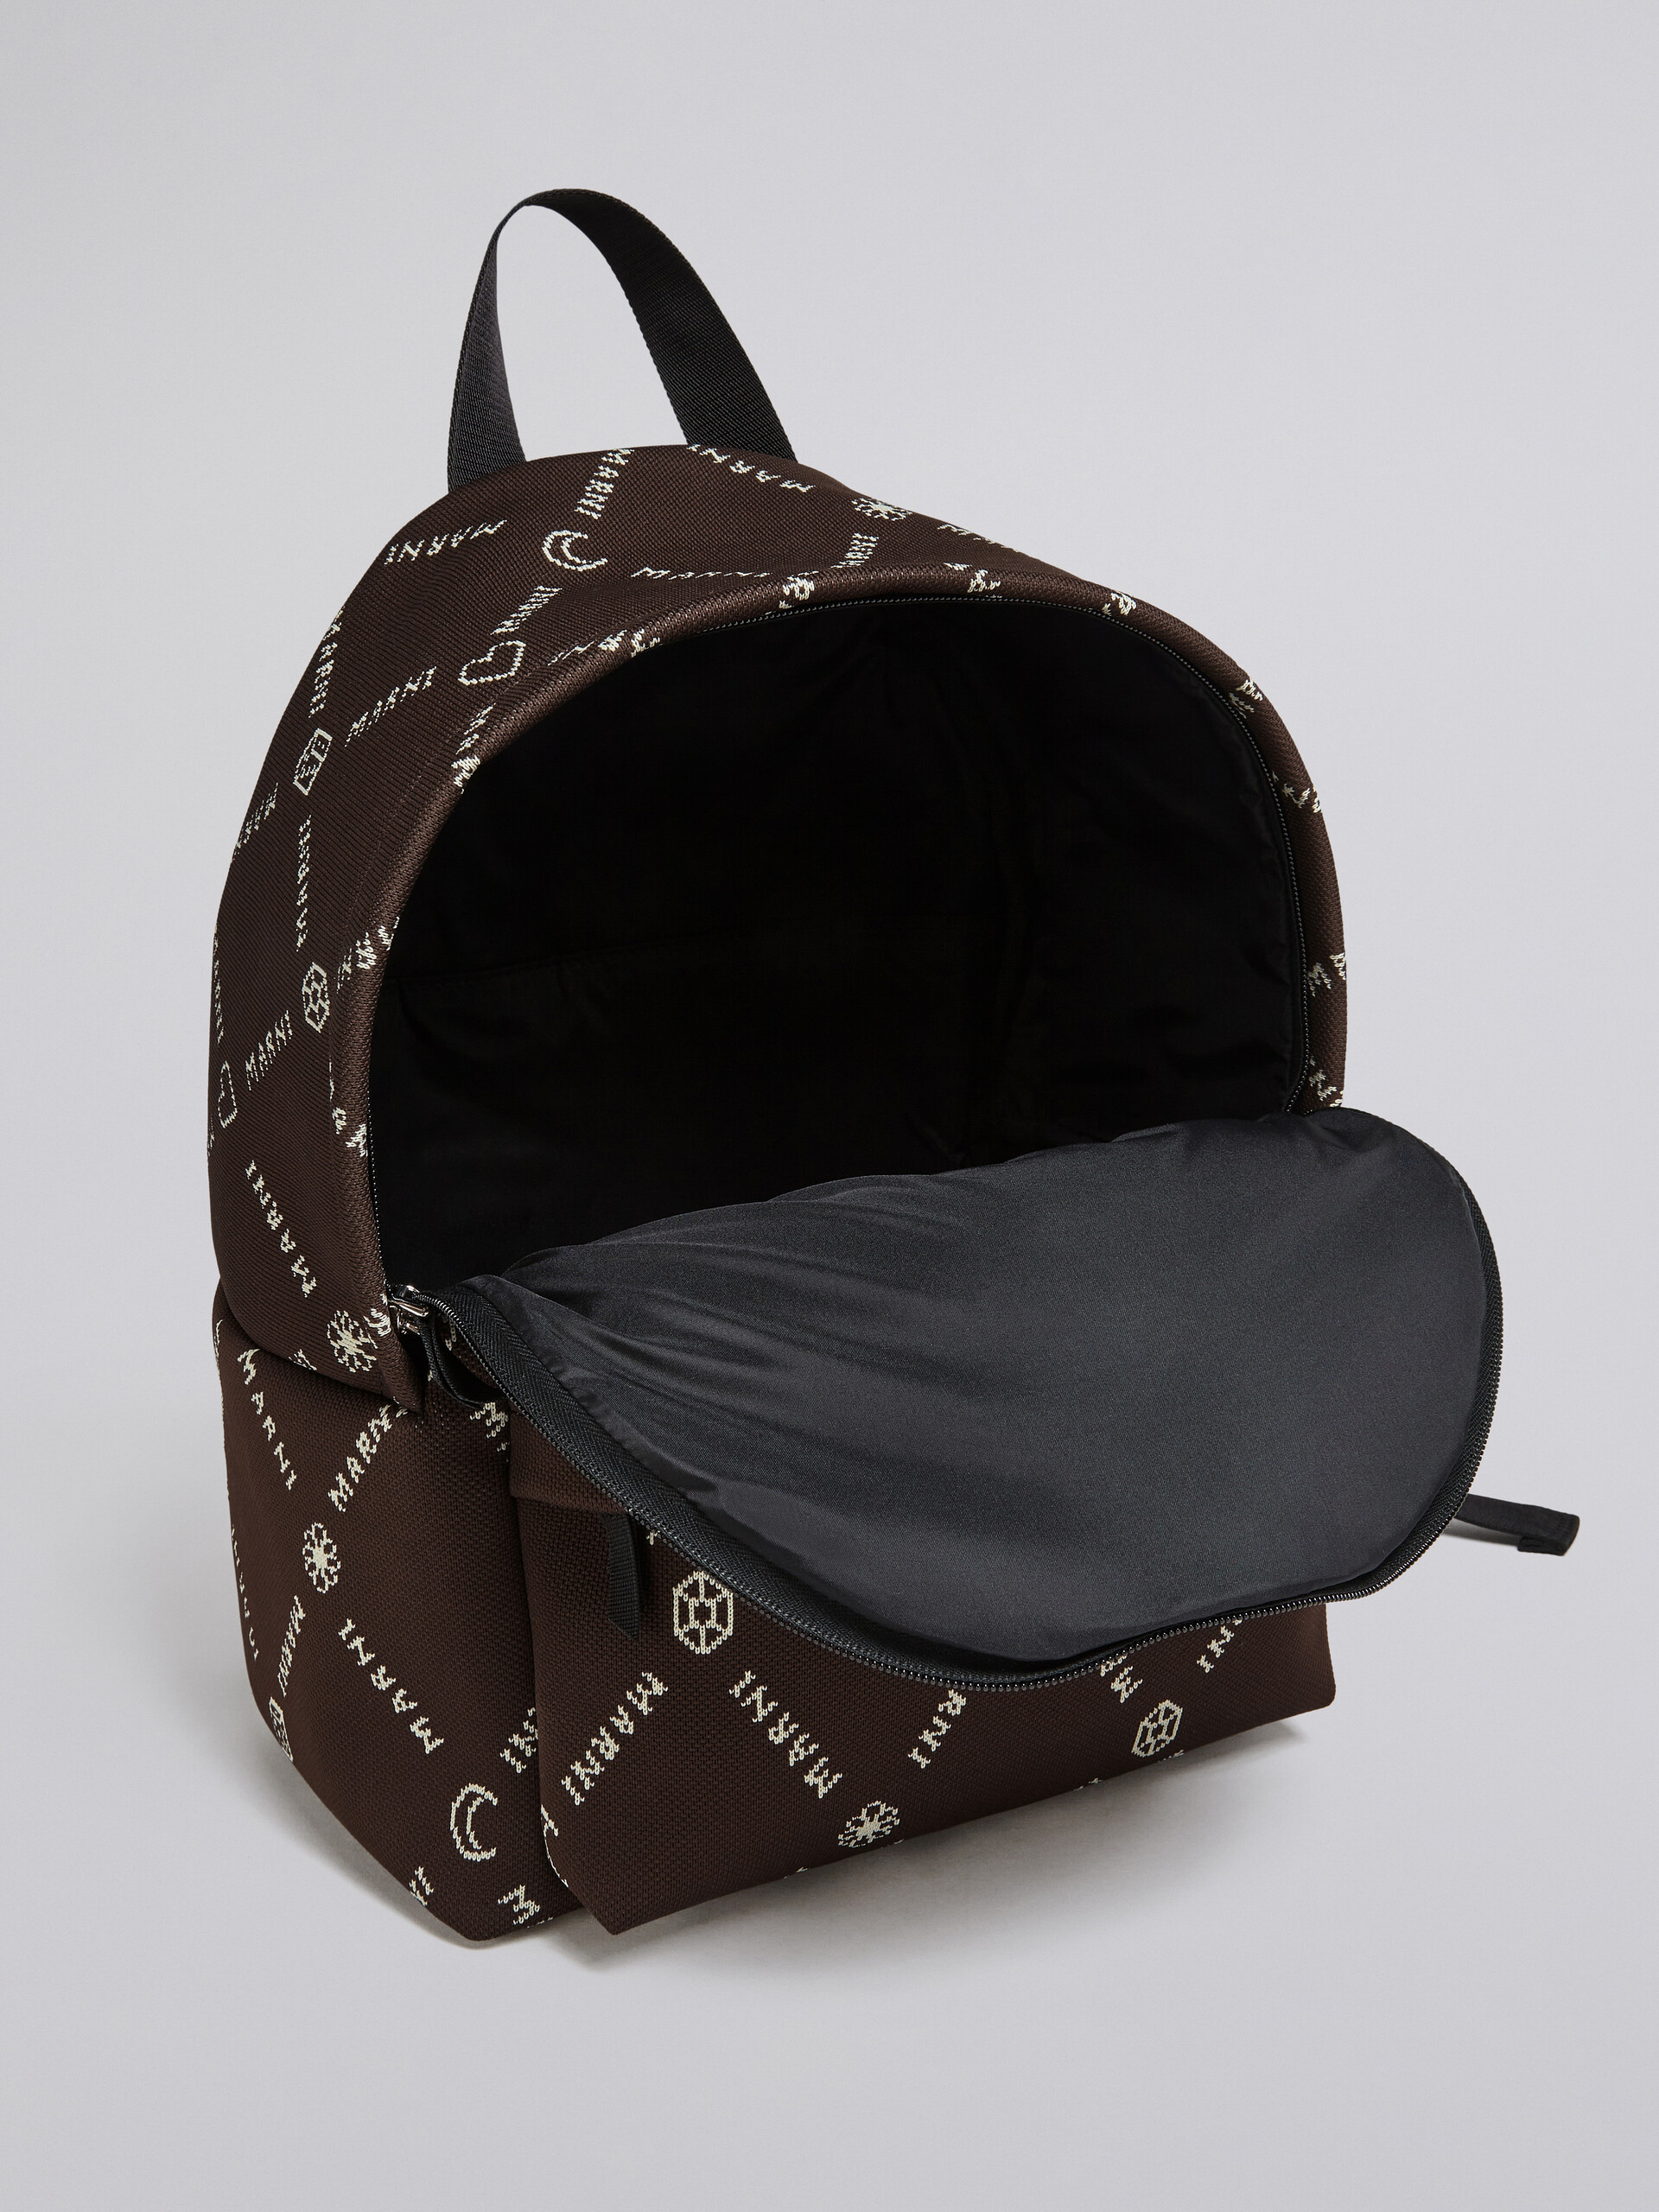 Marnigram jacquard backpack - Backpack - Image 4